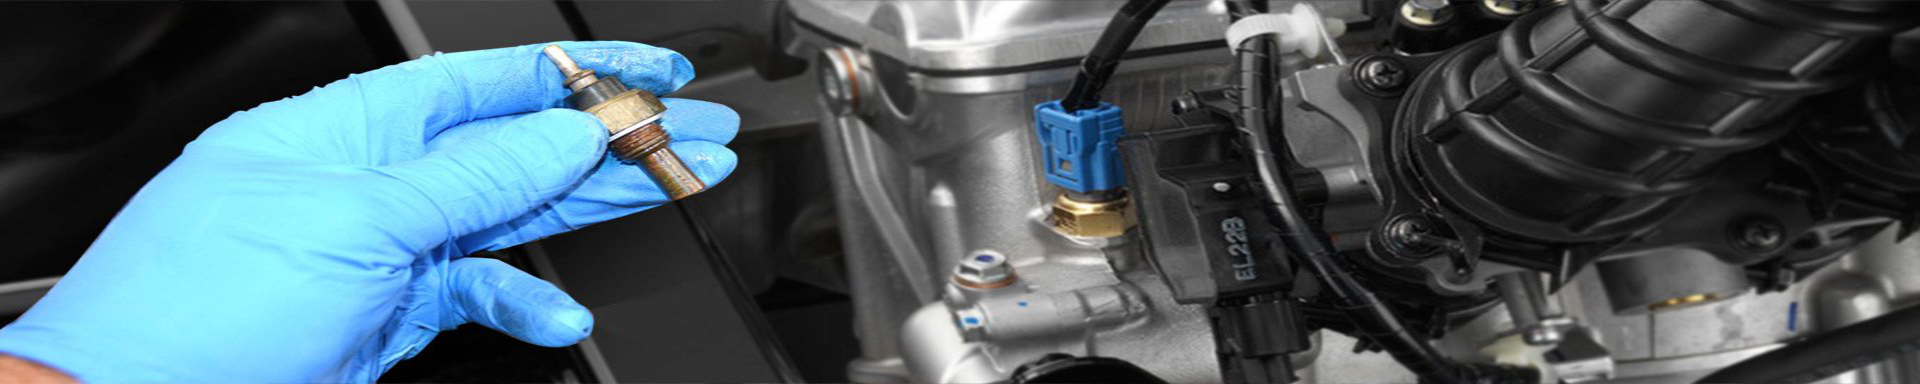 Engine Sensors & Switches | MunroPowersports.com | Munro Industries mp-100803080610